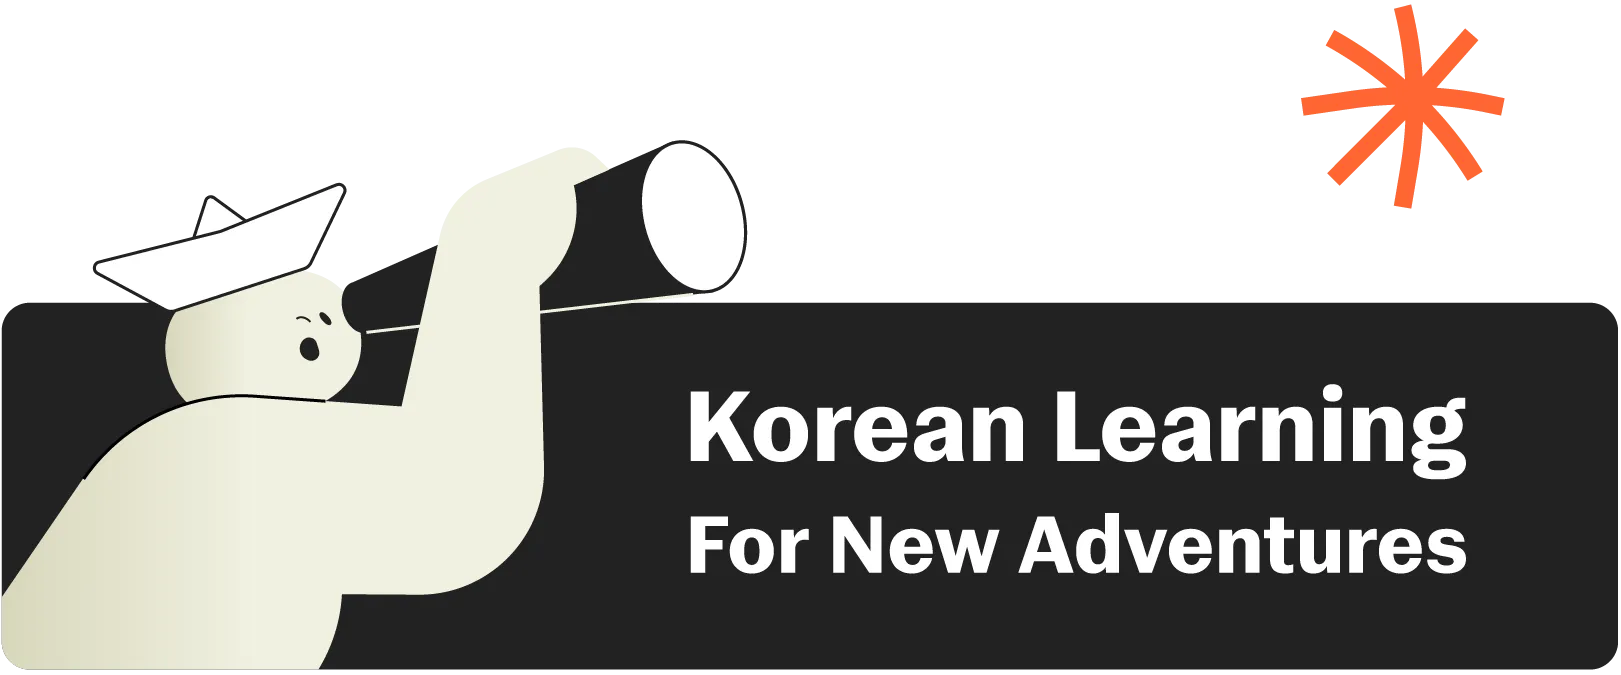 23 Korean grammar points in one mega sentence!